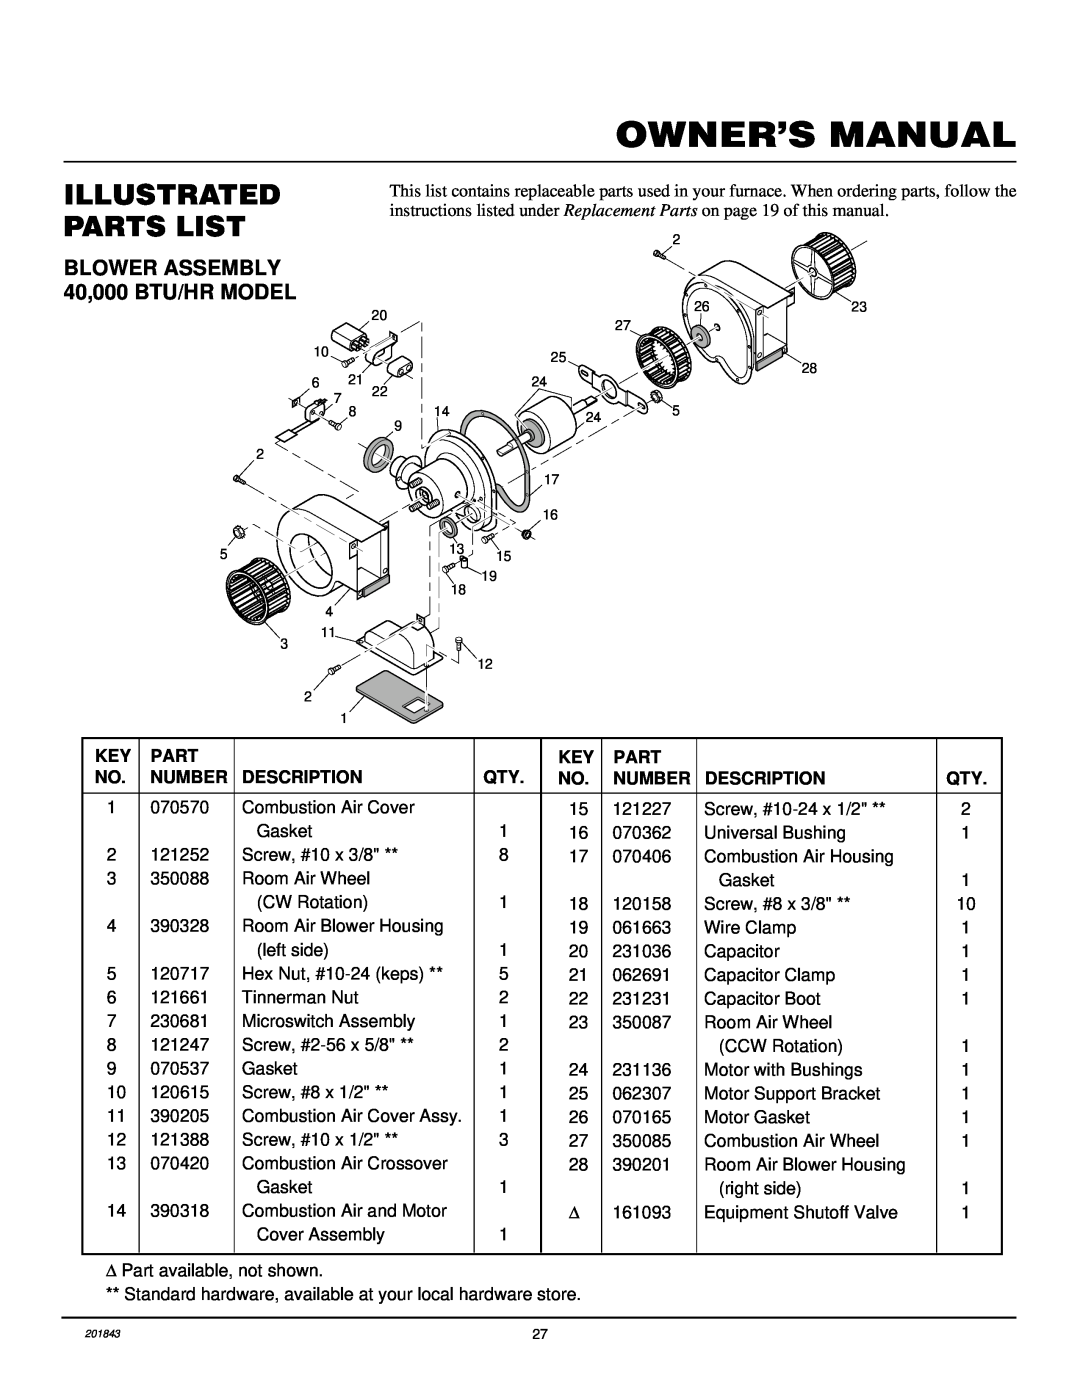 Williams 4003531, 2503531 installation manual Illustrated Parts List, BLOWER ASSEMBLY 40,000 BTU/HR MODEL 